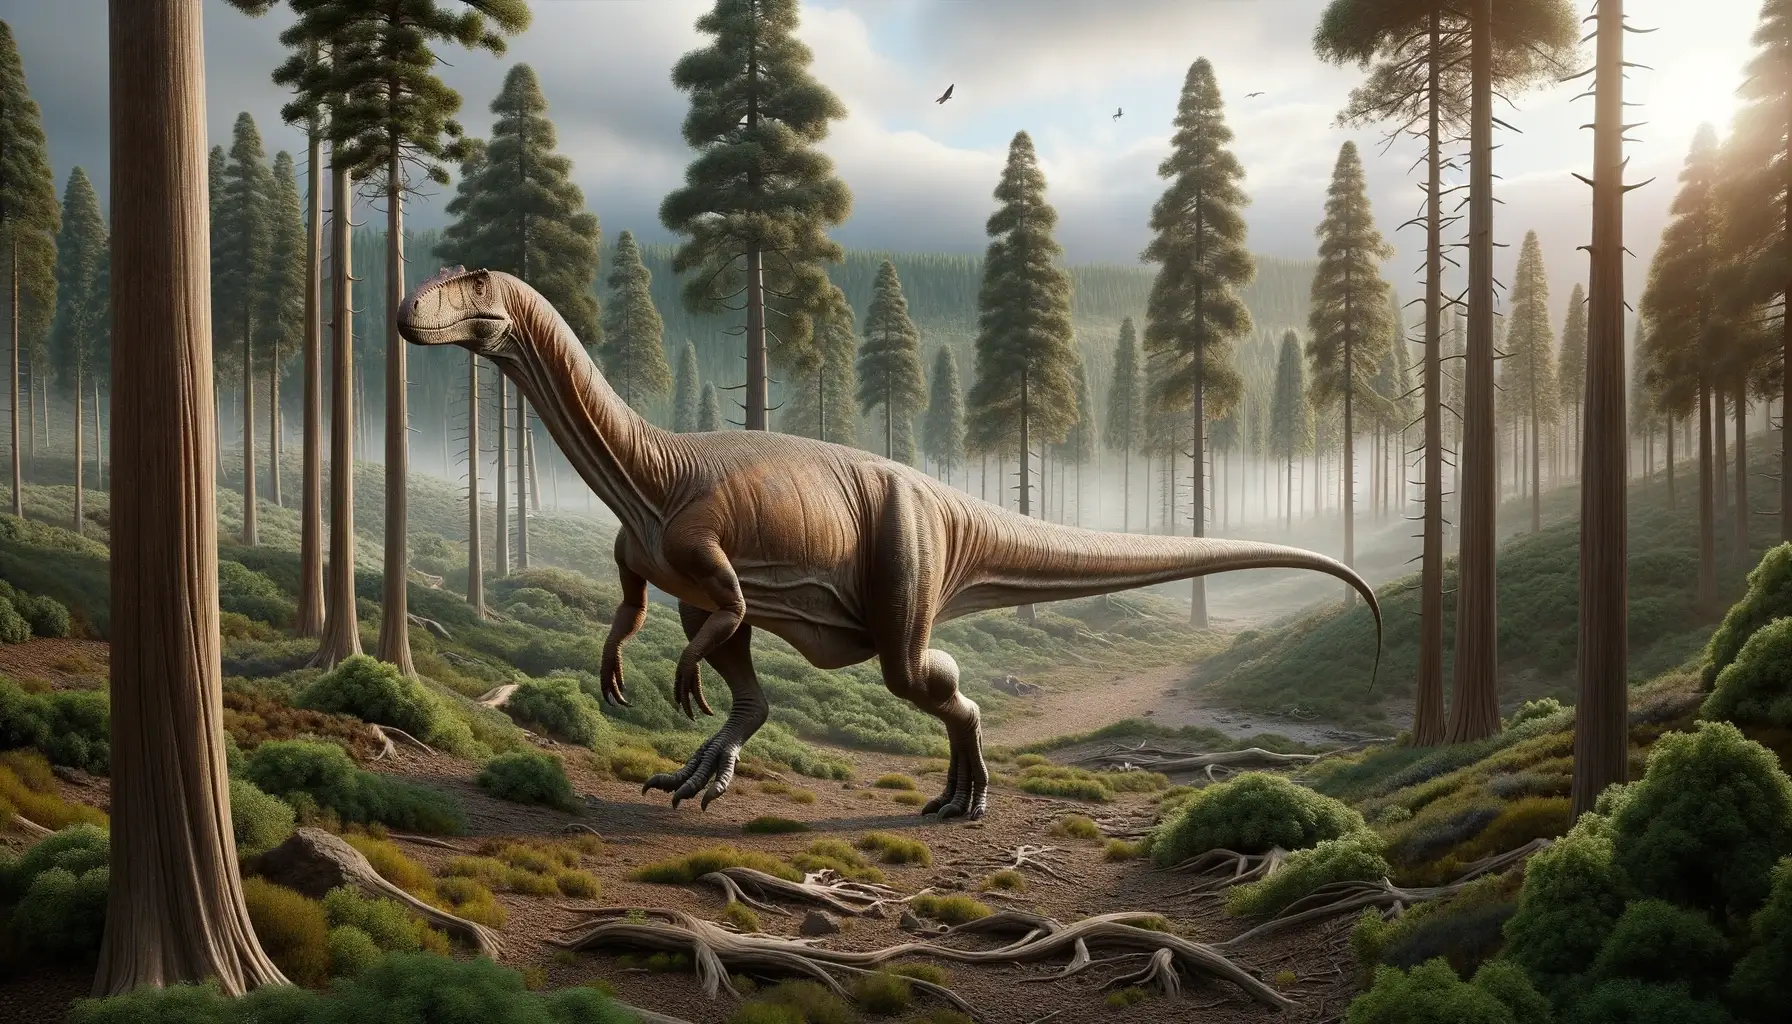 Ammosaurus dinosaur in Late Triassic forest habitat.